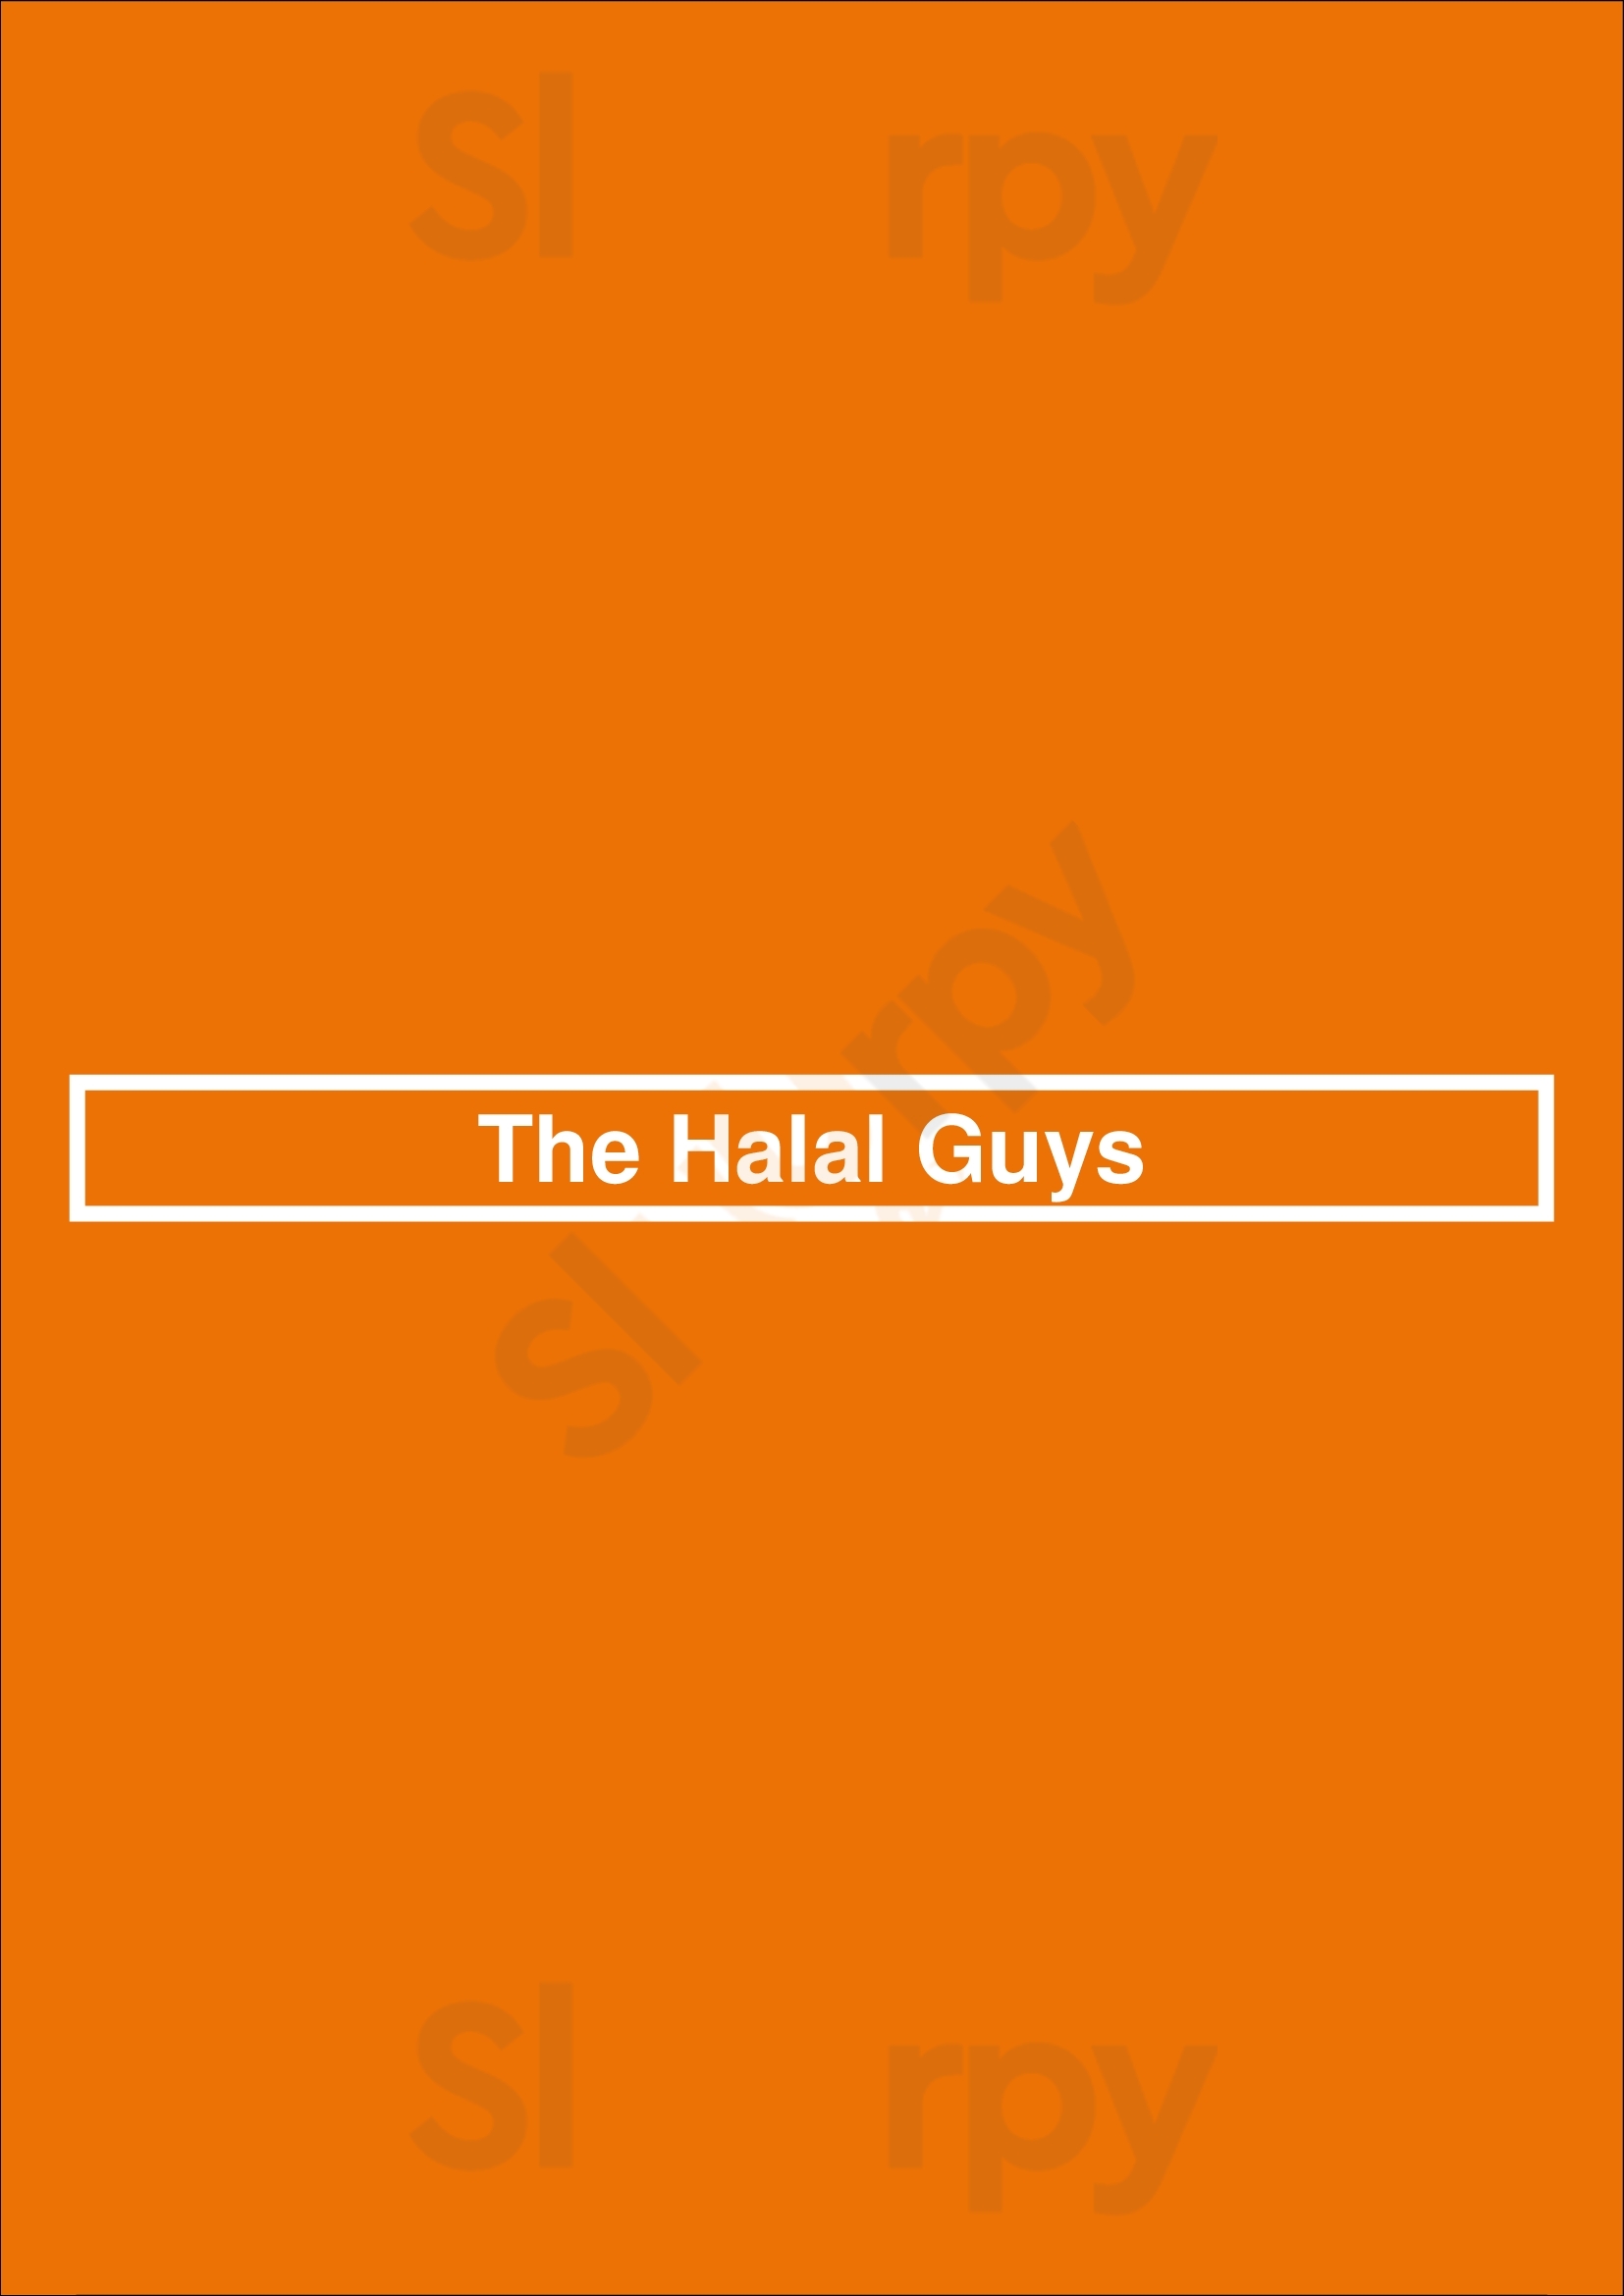 The Halal Guys Rowland Heights Menu - 1